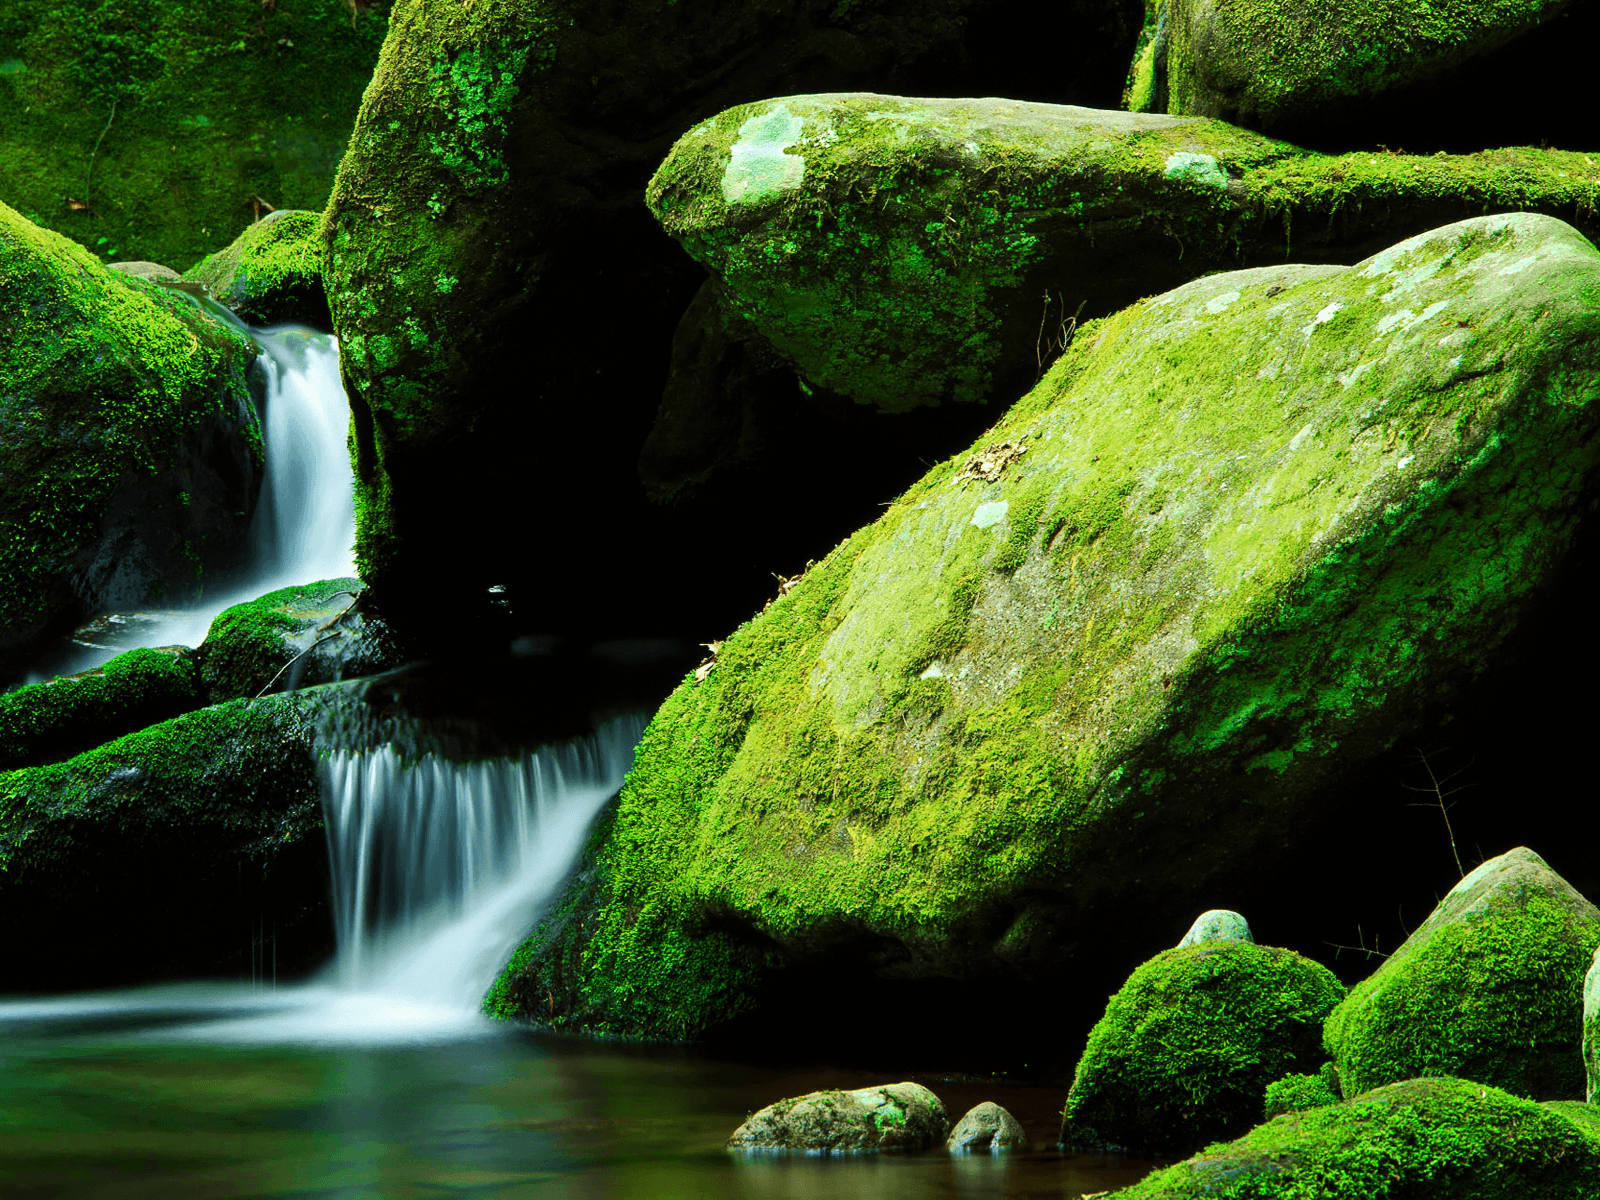 Cool Stream, Moss Covered Rocks